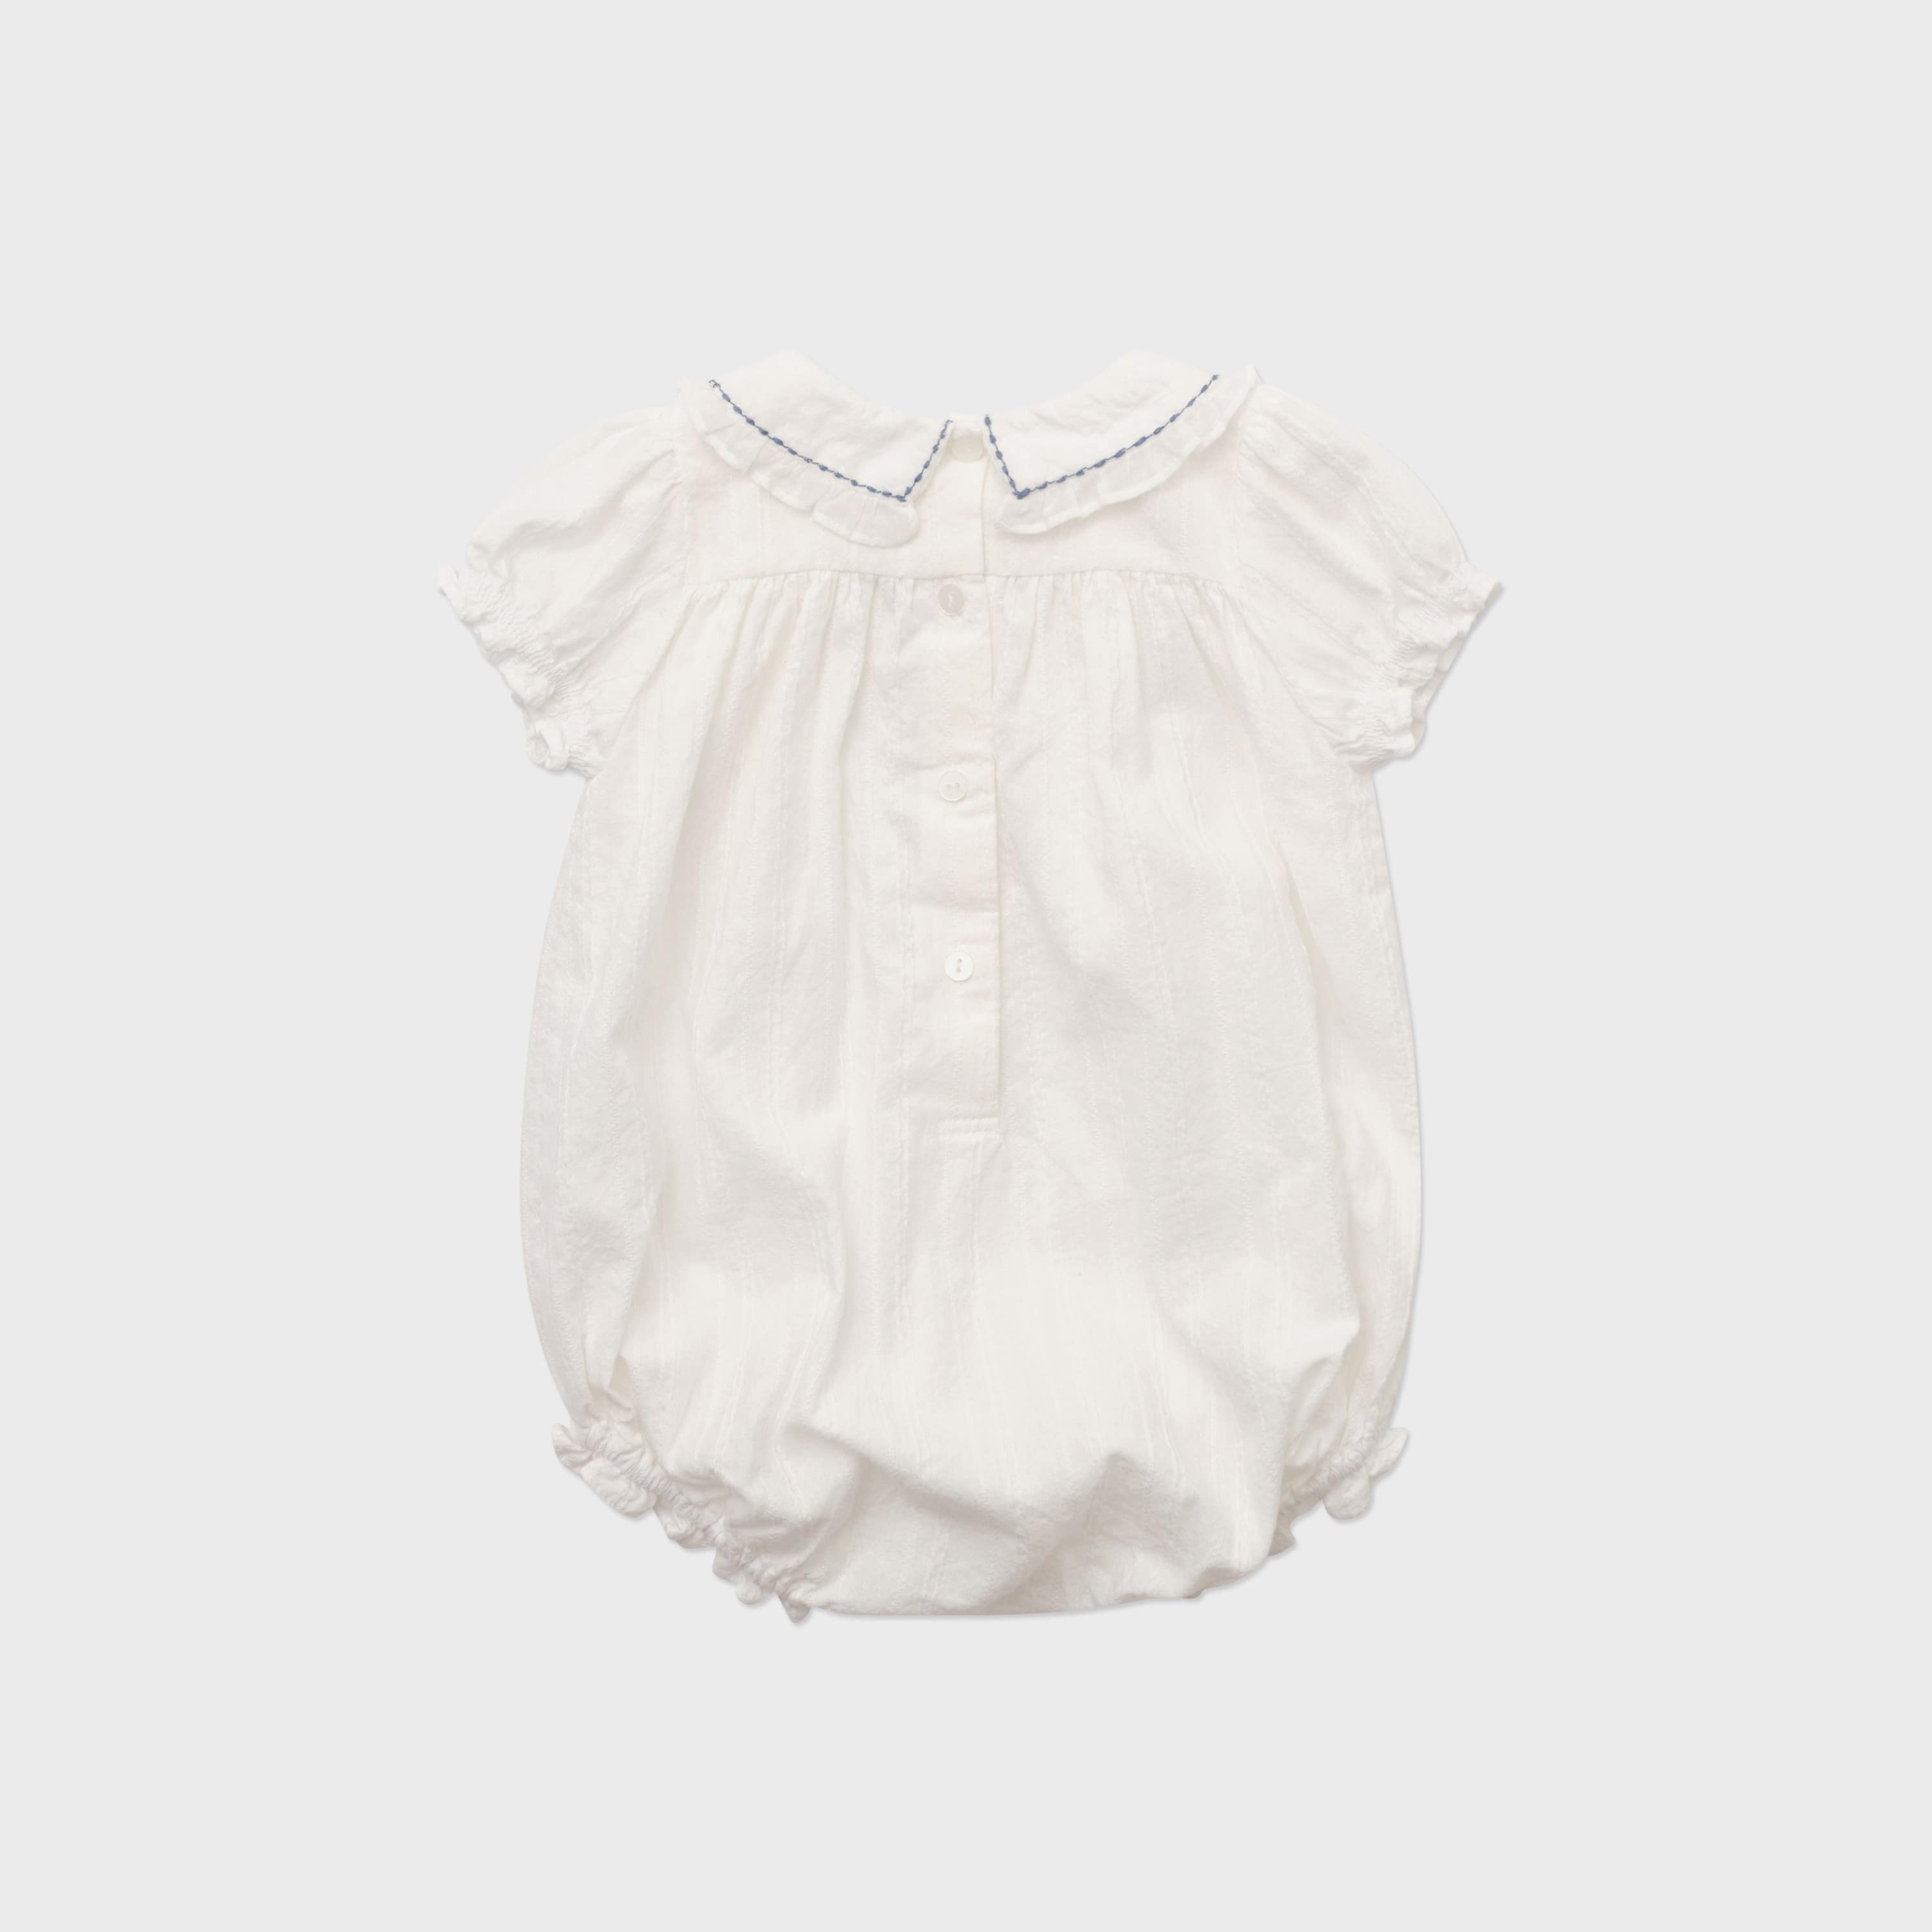 Baby Girls White Cotton Babysuit